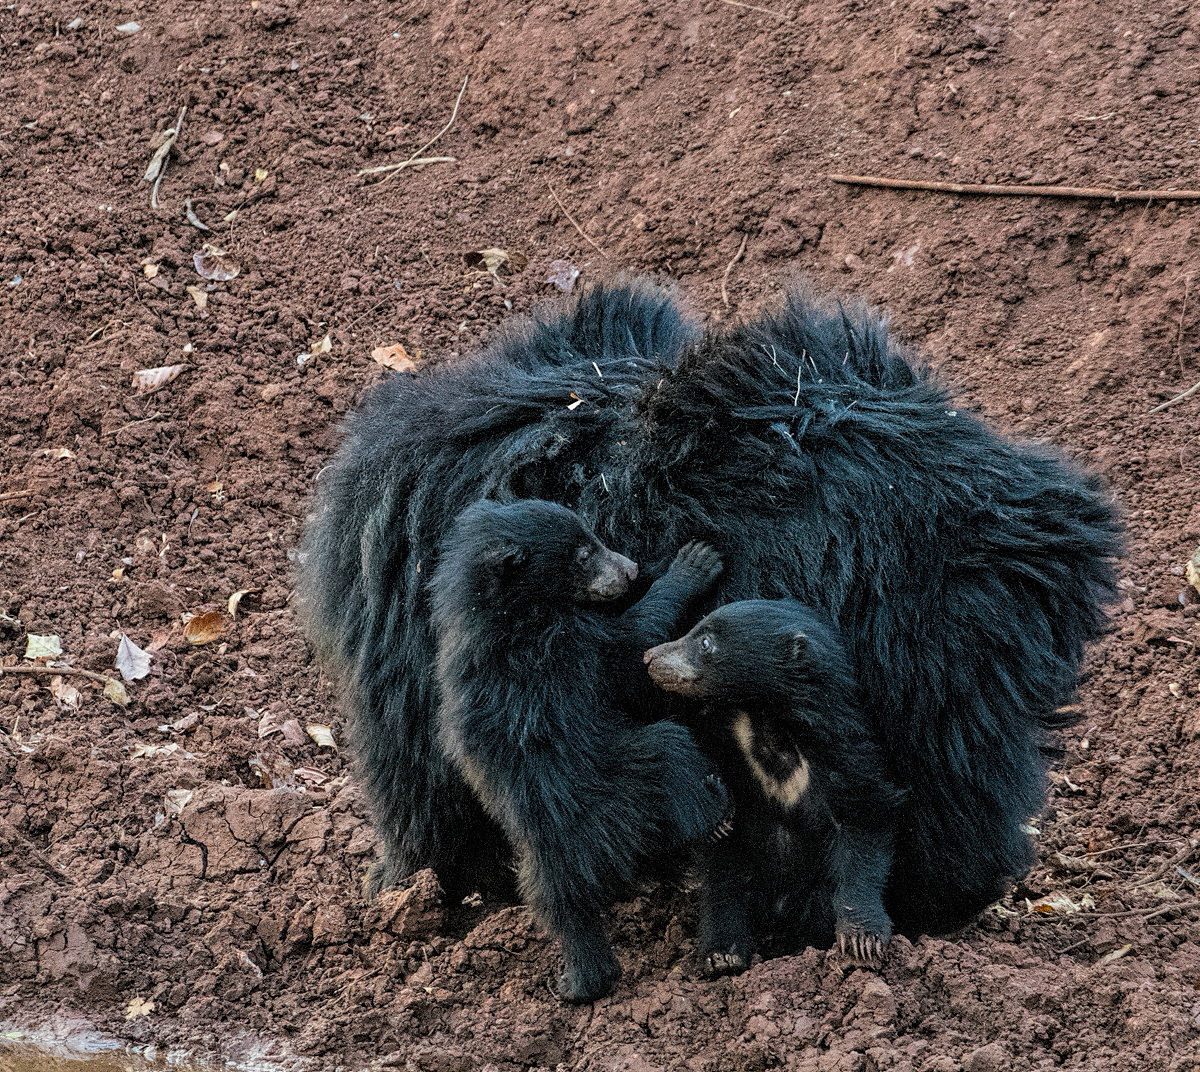 Sloth Bear, 2 cubs climbing onto mother's back